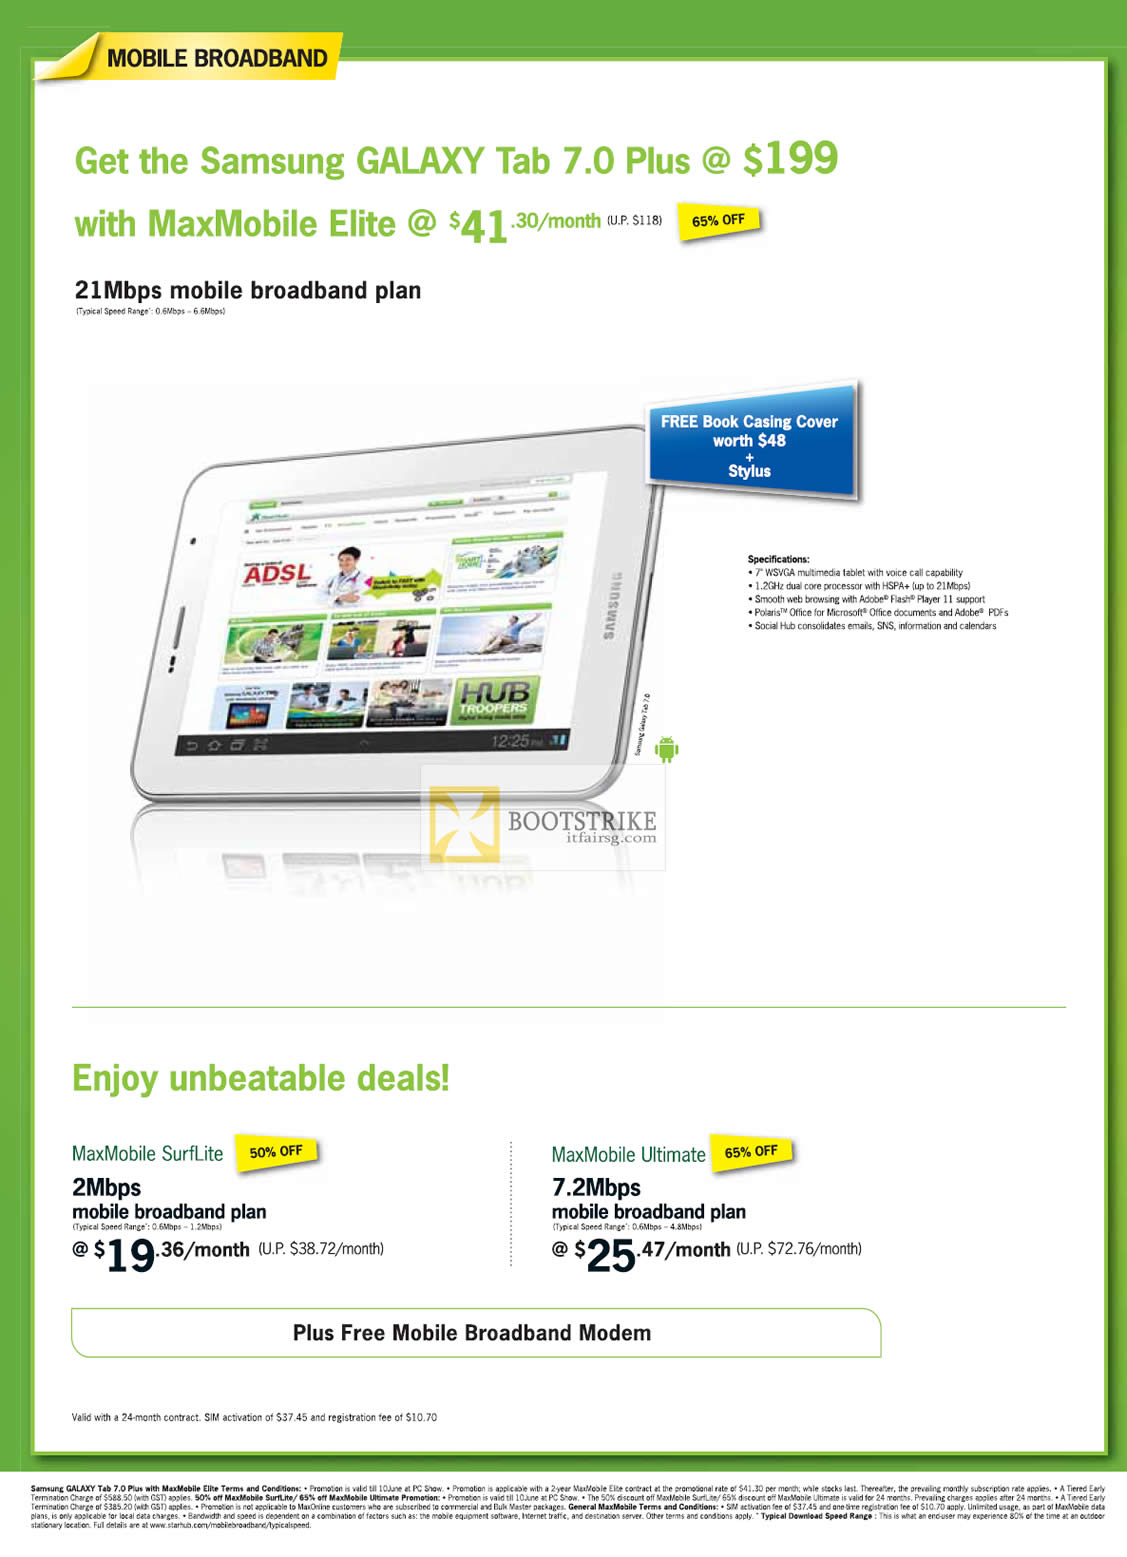 PC SHOW 2012 price list image brochure of Starhub Samsung Galaxy Tab 7.0 Plus, MaxMobile Elite, SurfLite, Ultimate Mobile Broadband